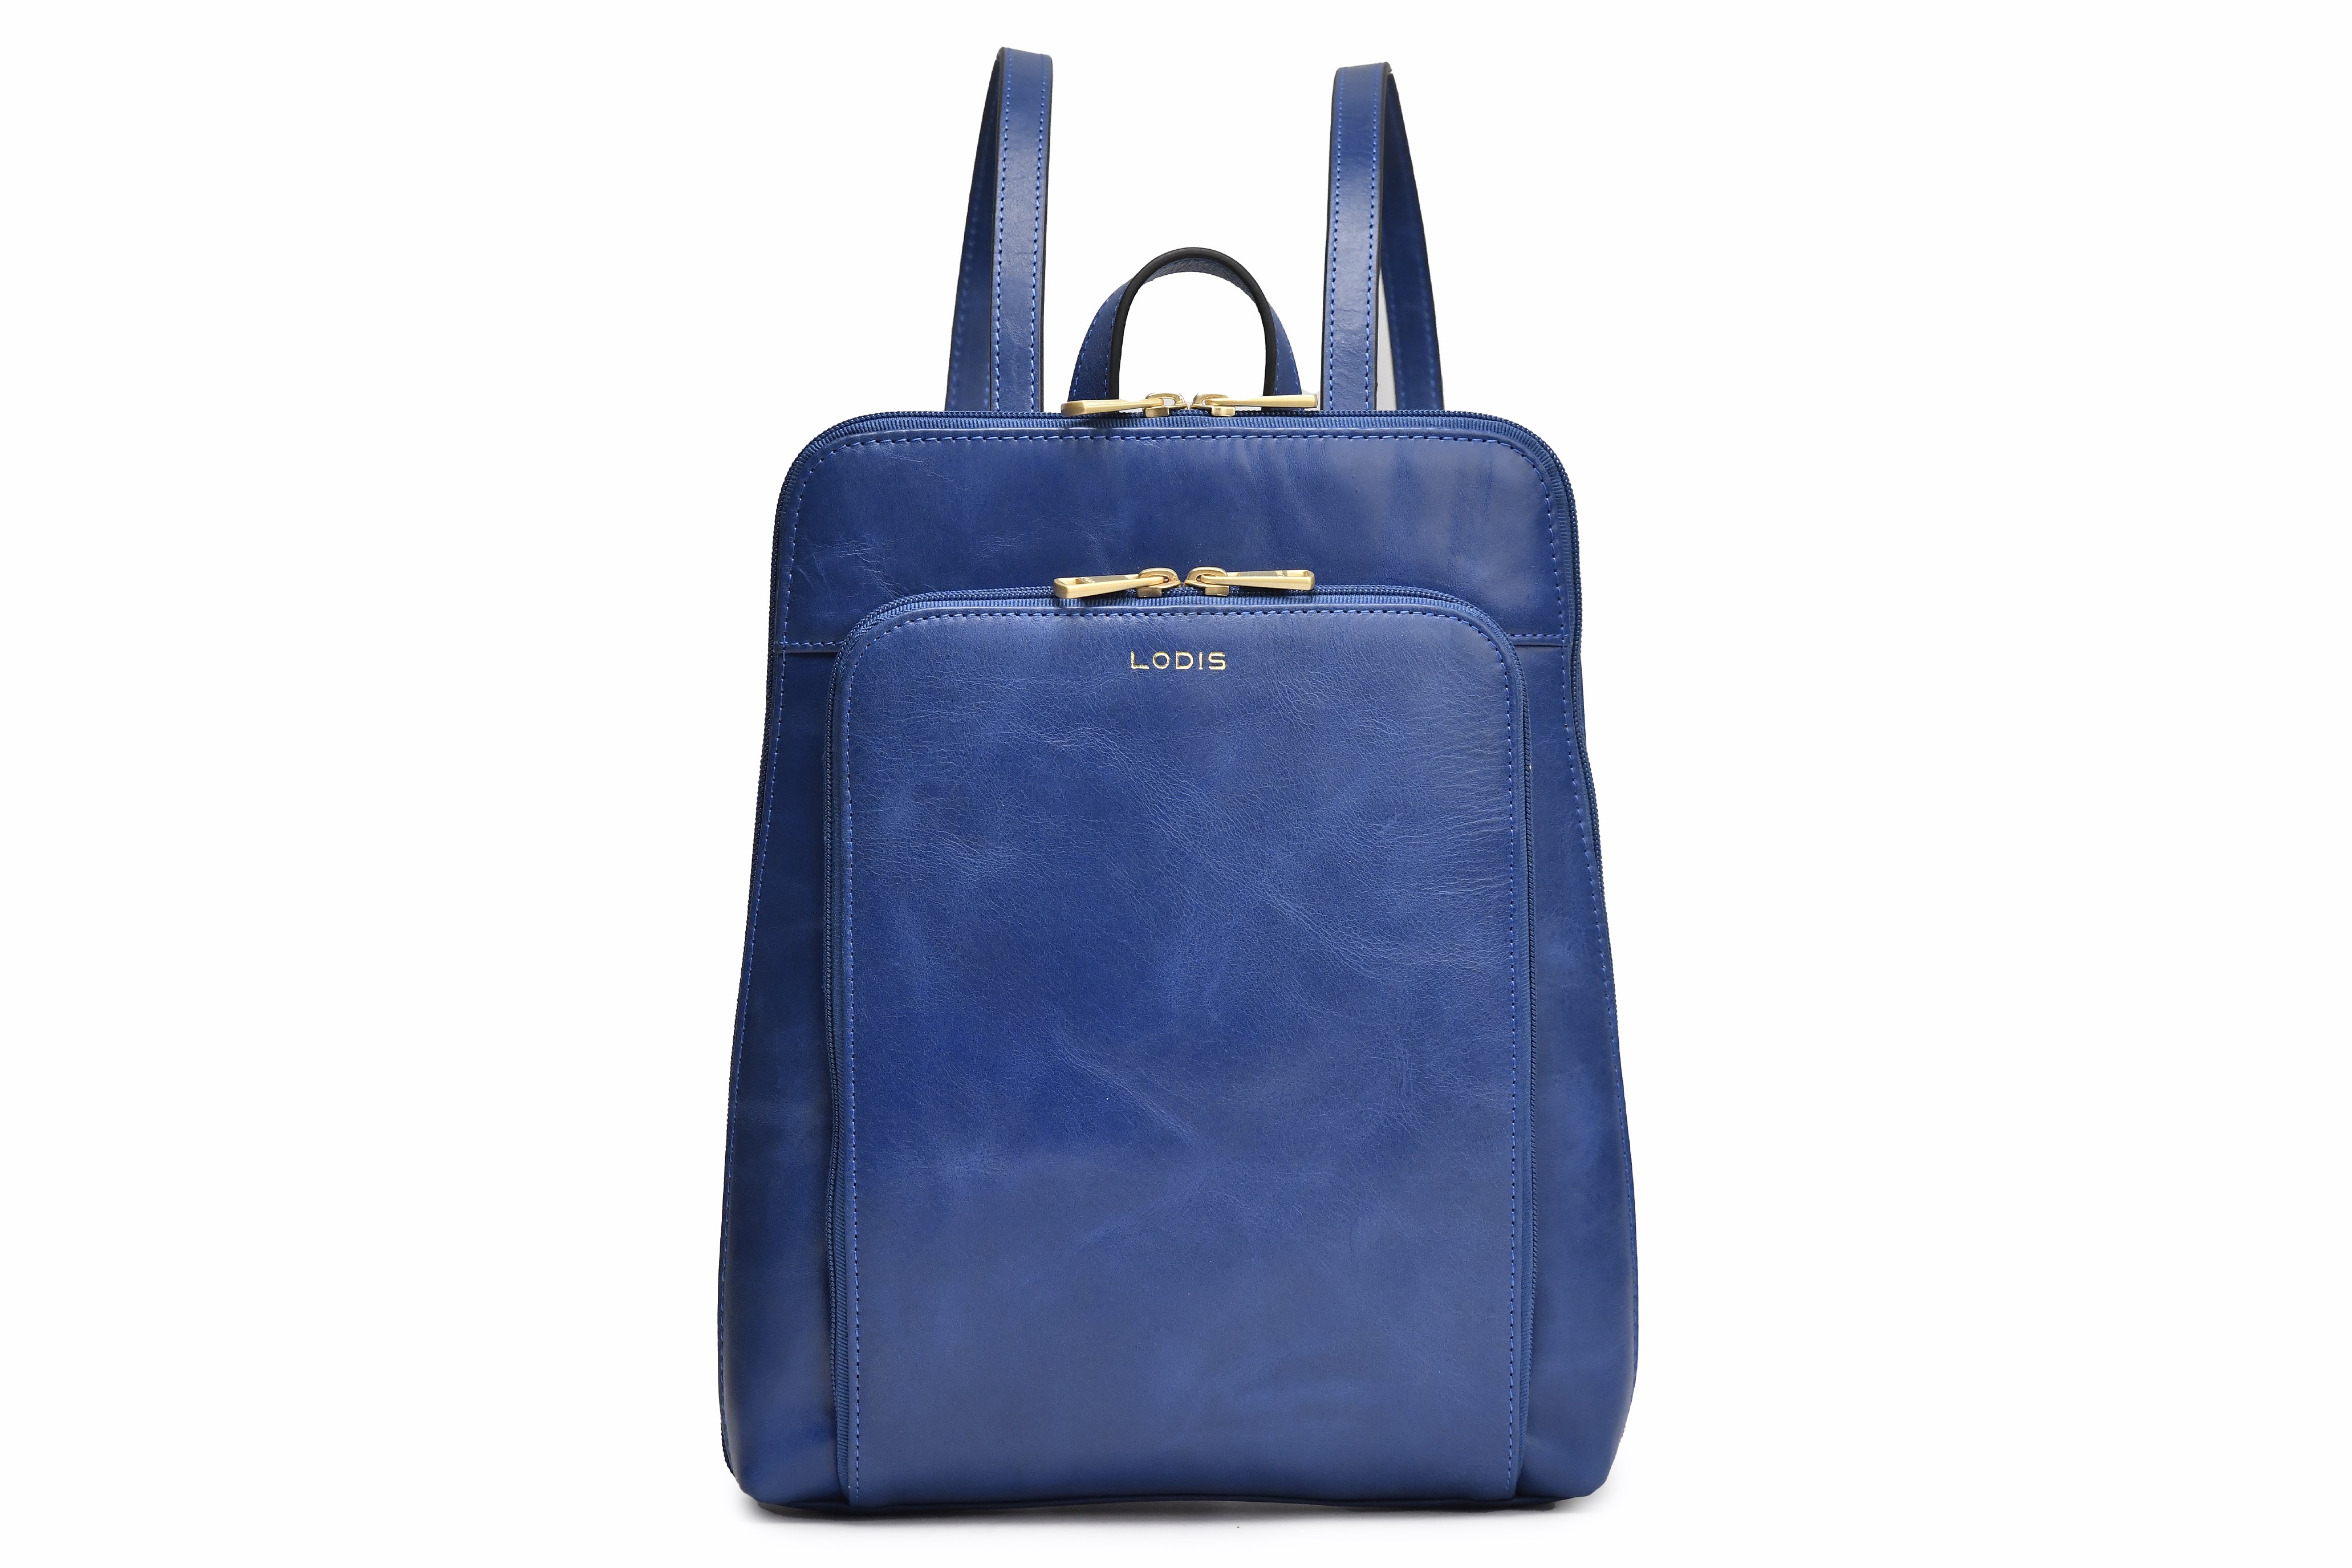 Get the Irresistible Francesca Bag At Lodis 